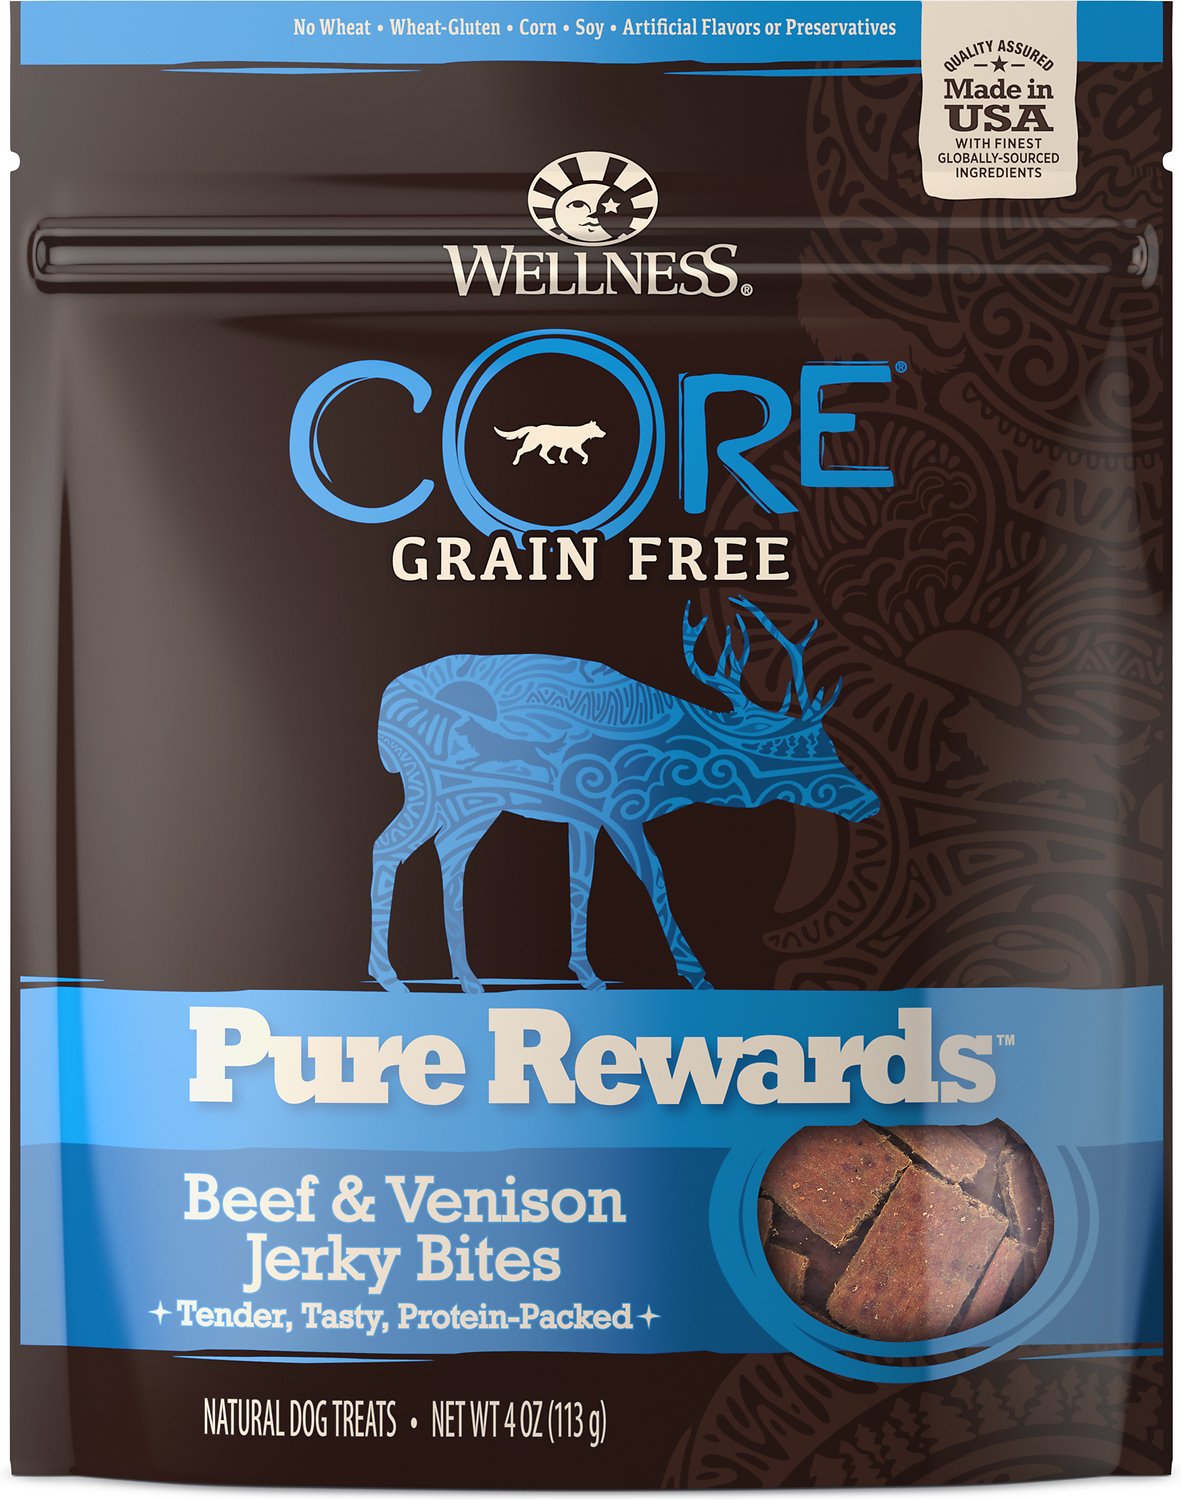 Pure Rewards - Wellness Treat - Dog  Treat - Training Treat - 4 Flavors - USA